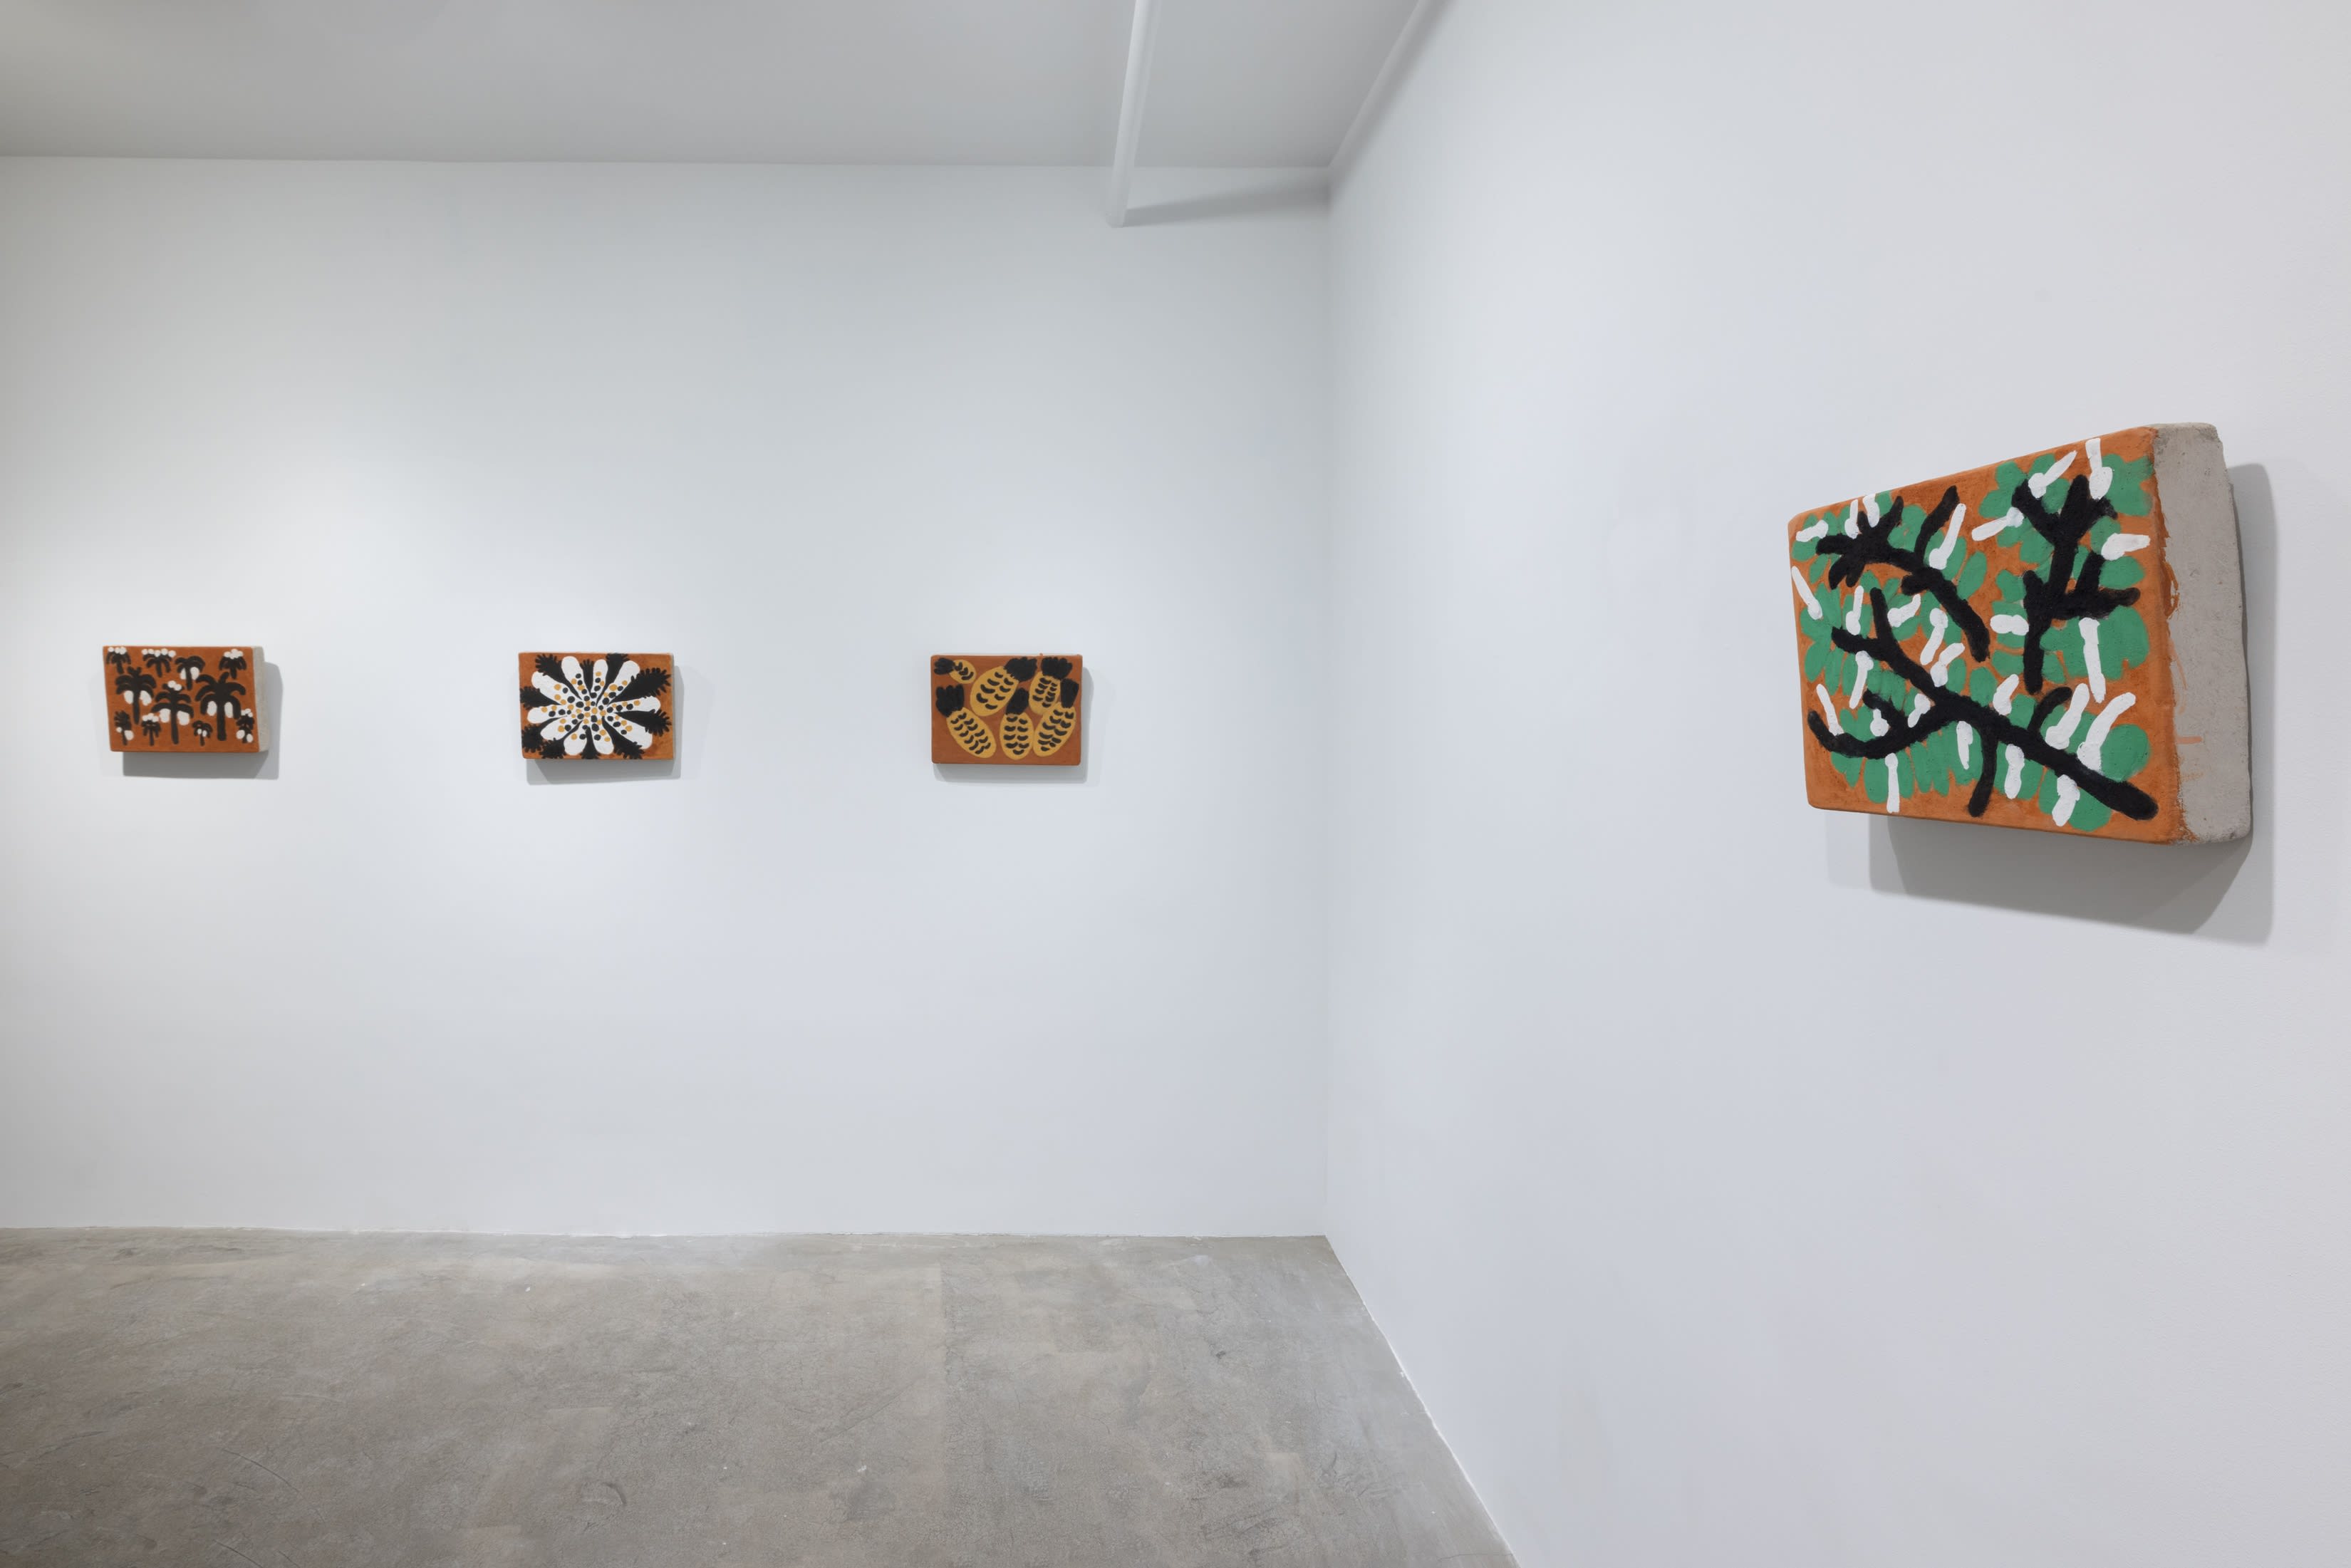 Solange Pessoa’s works in São Paulo exhibition